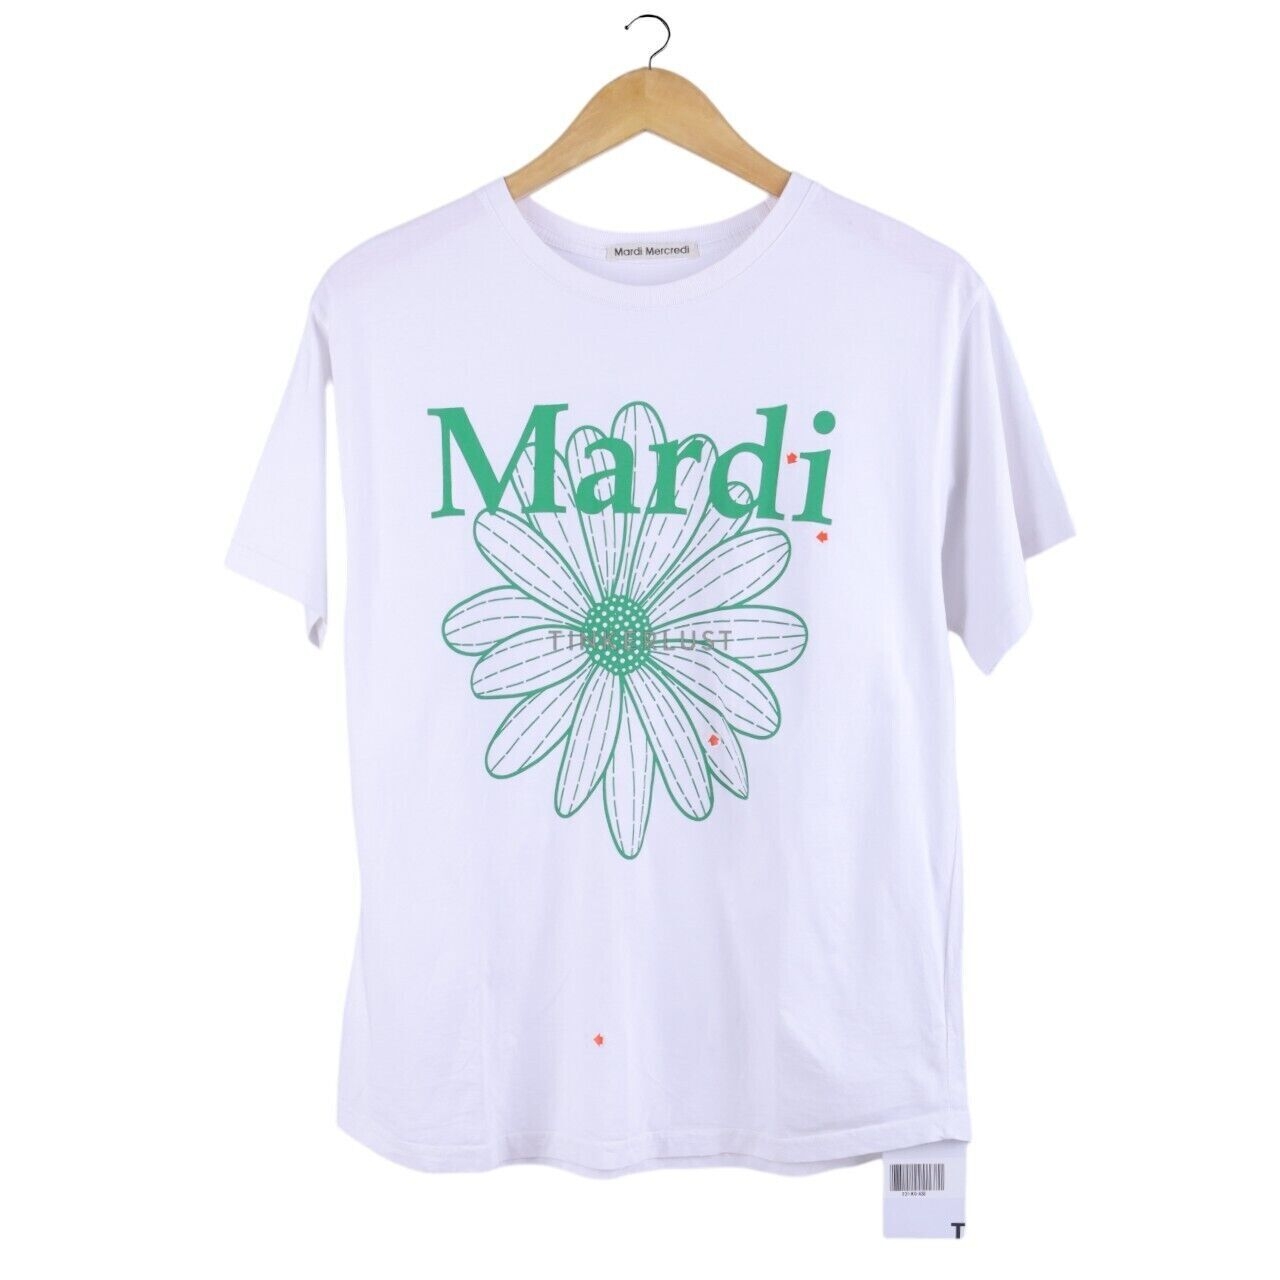 Mardi Mercredi White Tshirt